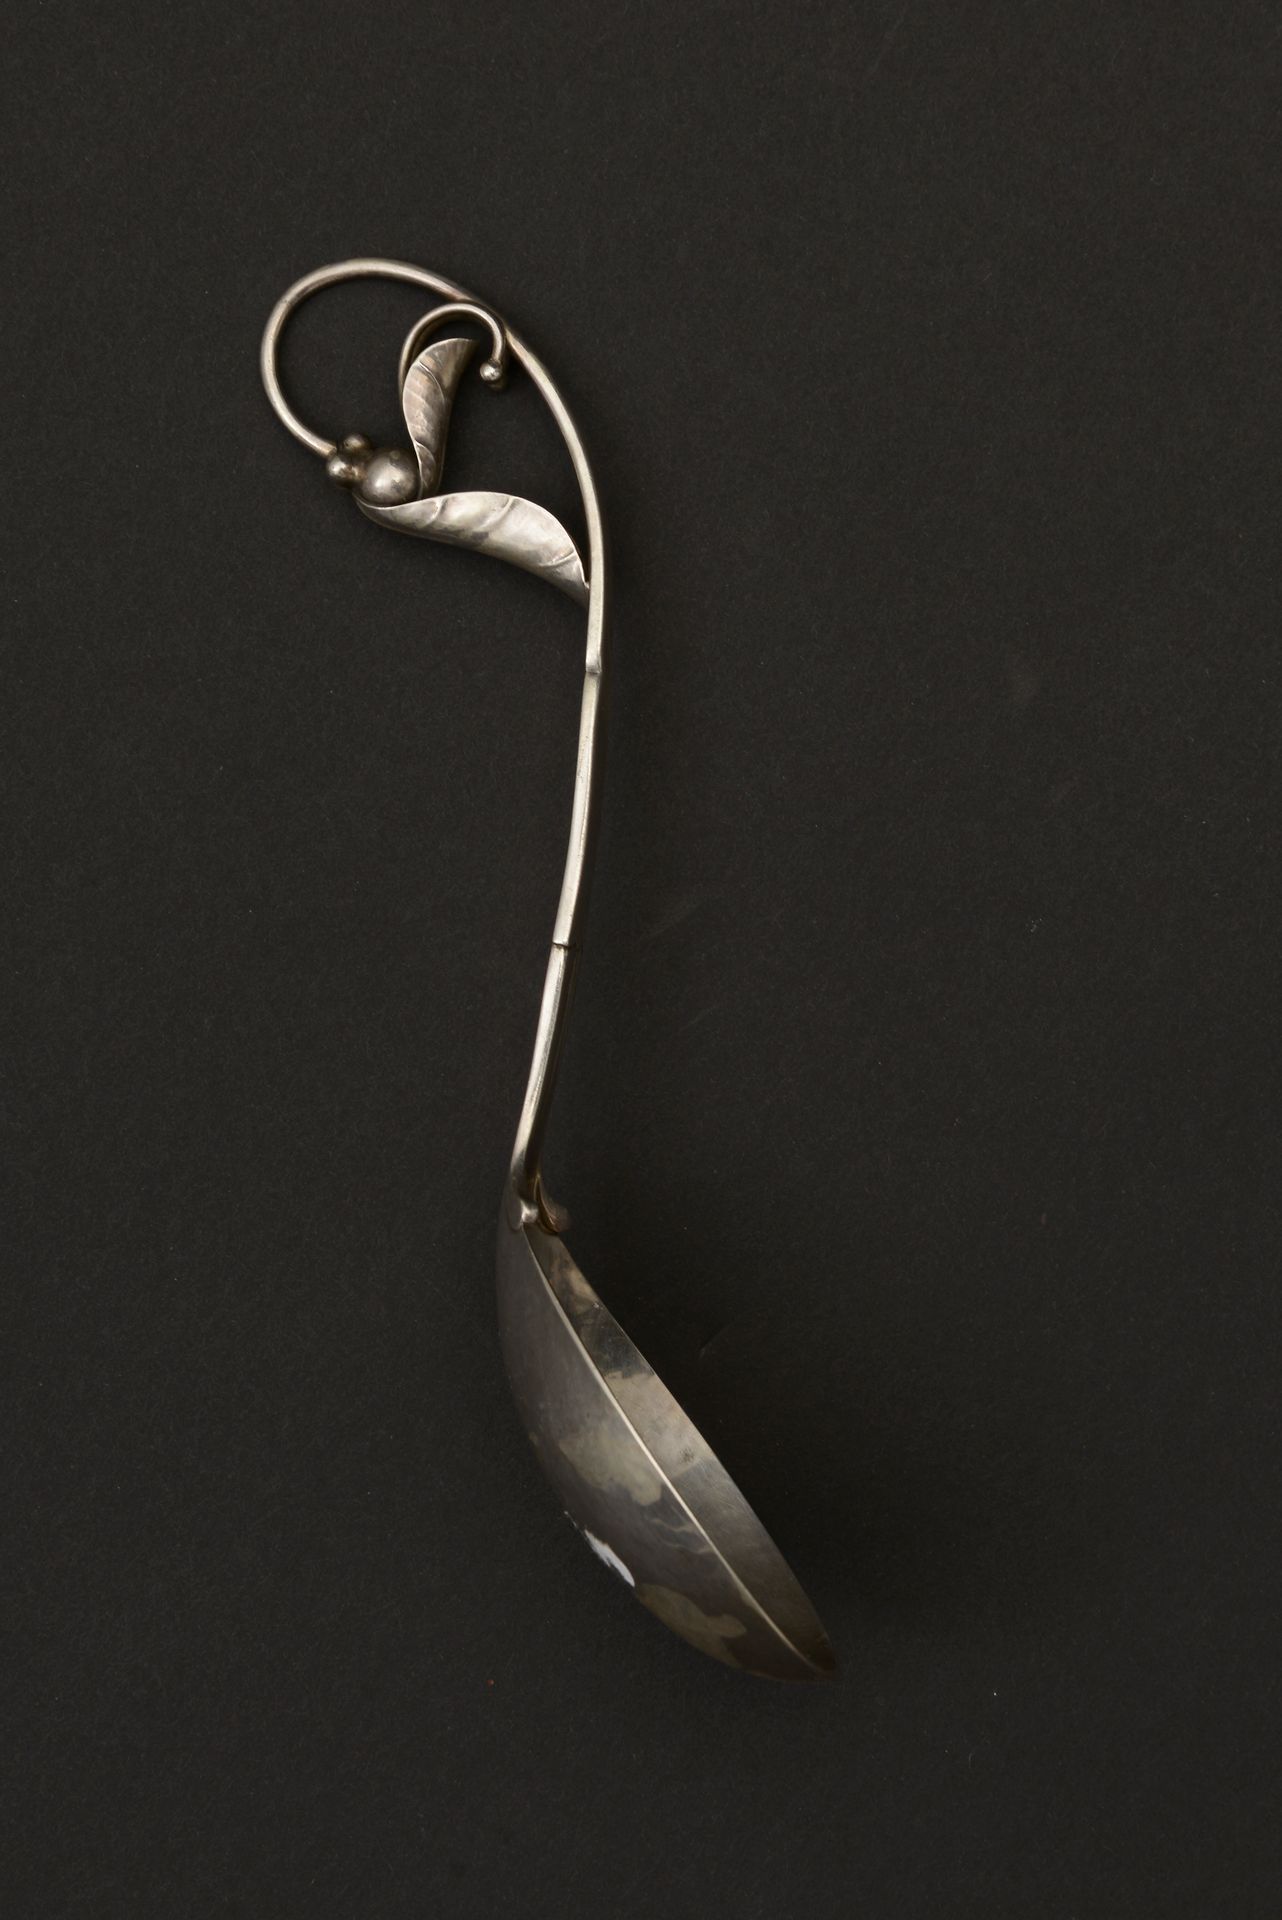 Null 酱汁或奶油勺，卵圆形的勺子是用锤子银做的，手柄是一个树枝的形状，最后是两片叶子交织在一起的球。

丹麦作品，约1940/50年。

进口标志 - 重量&hellip;